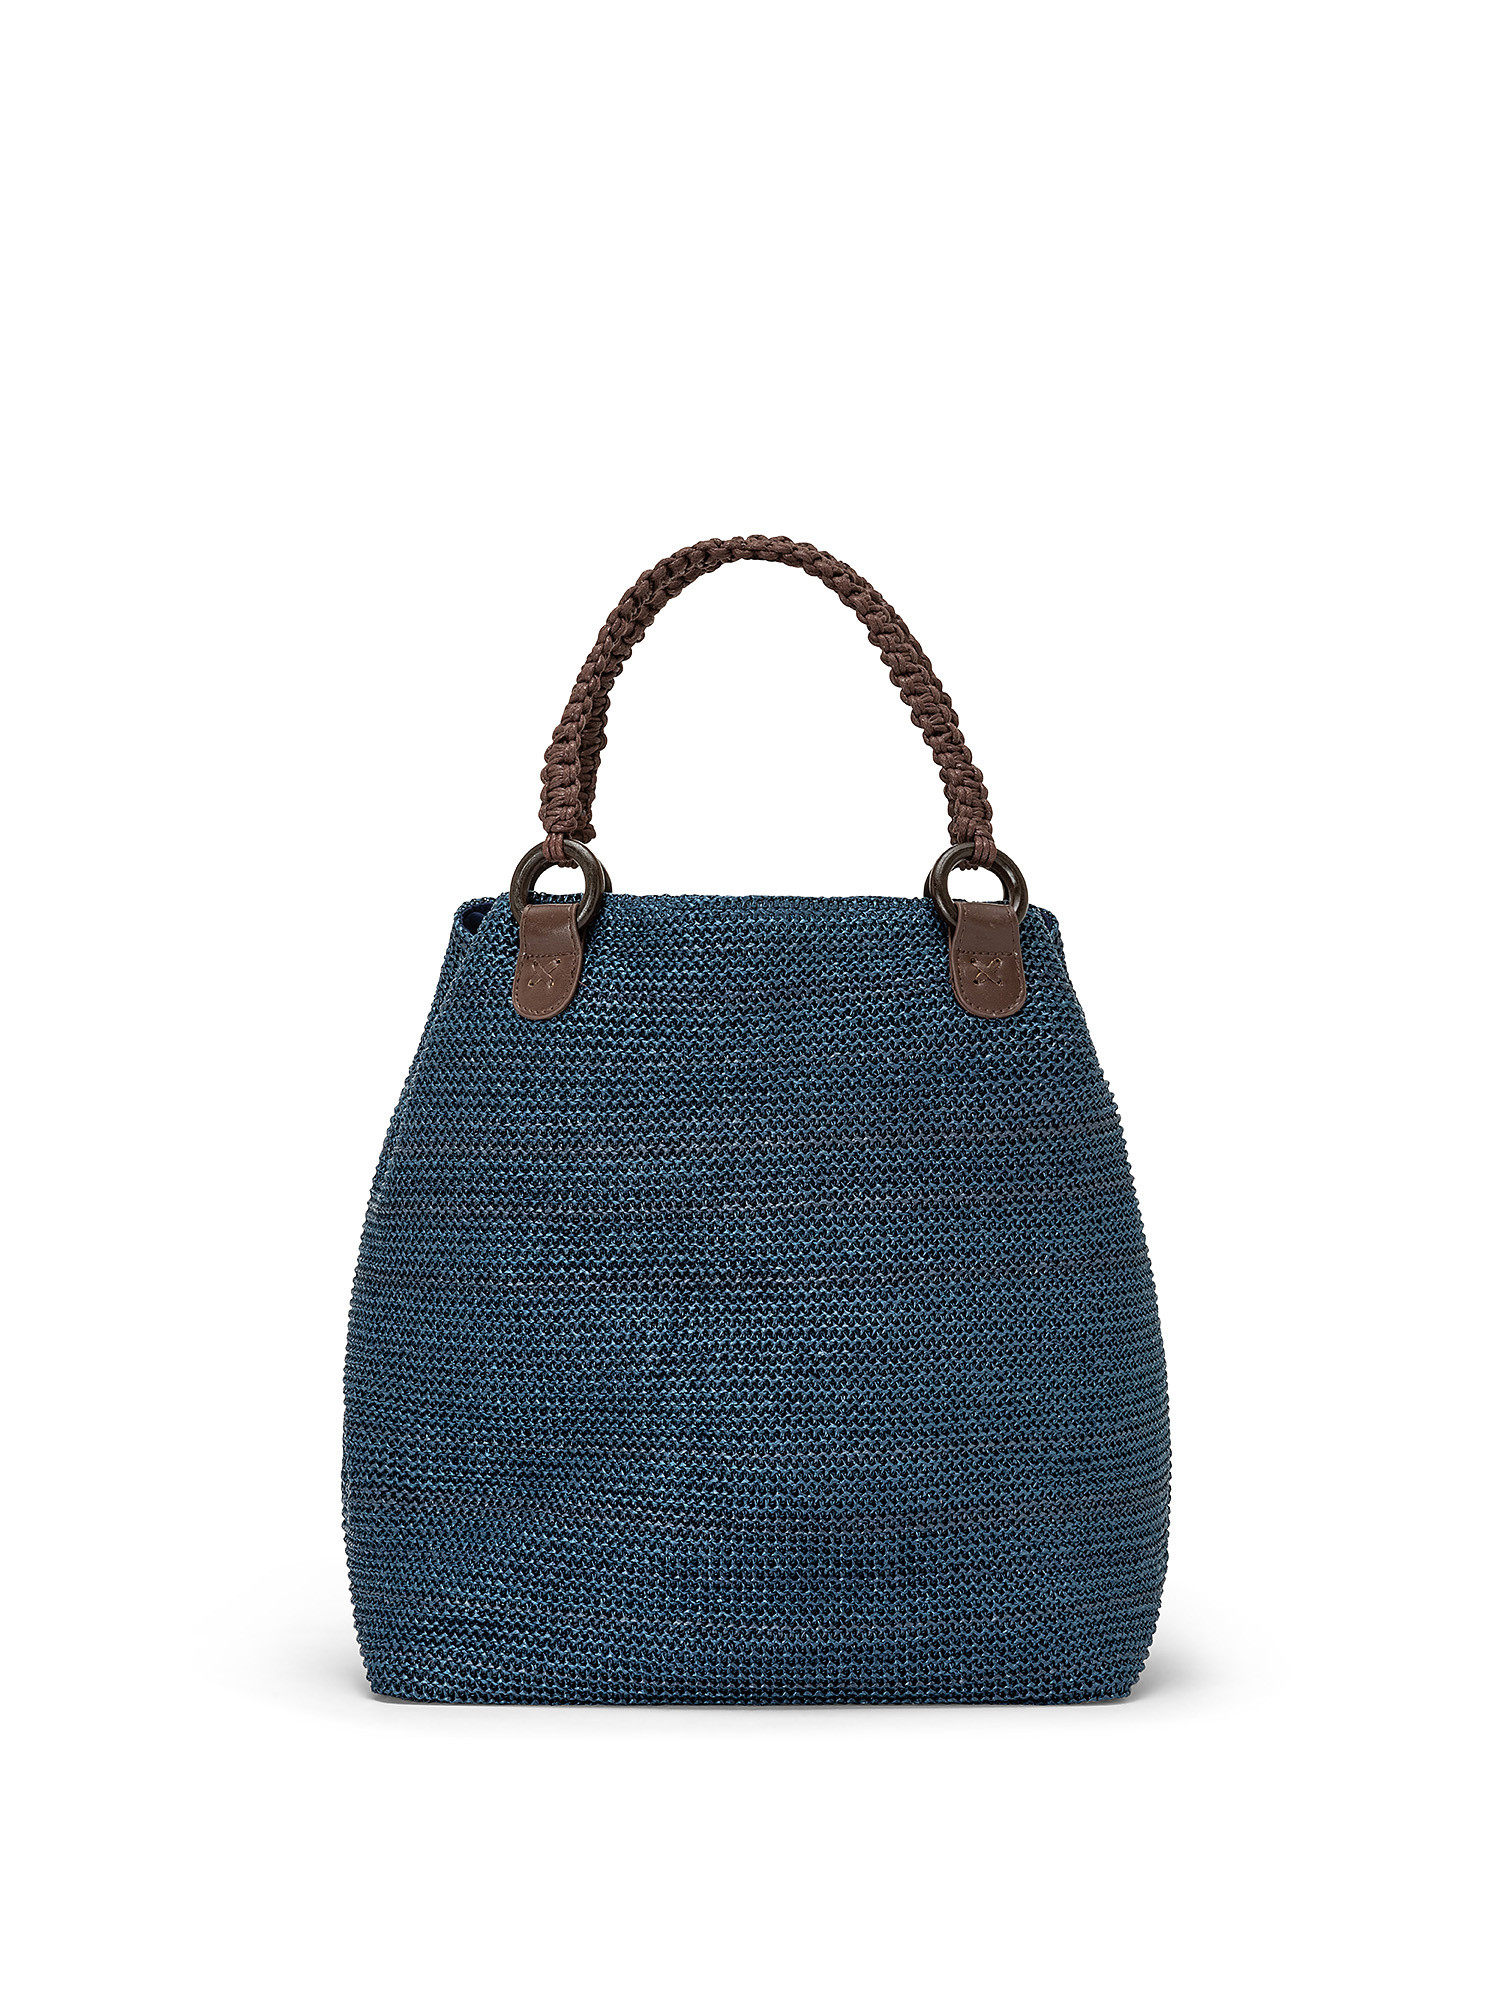 Straw-effect shopping bag, Blue, large image number 0